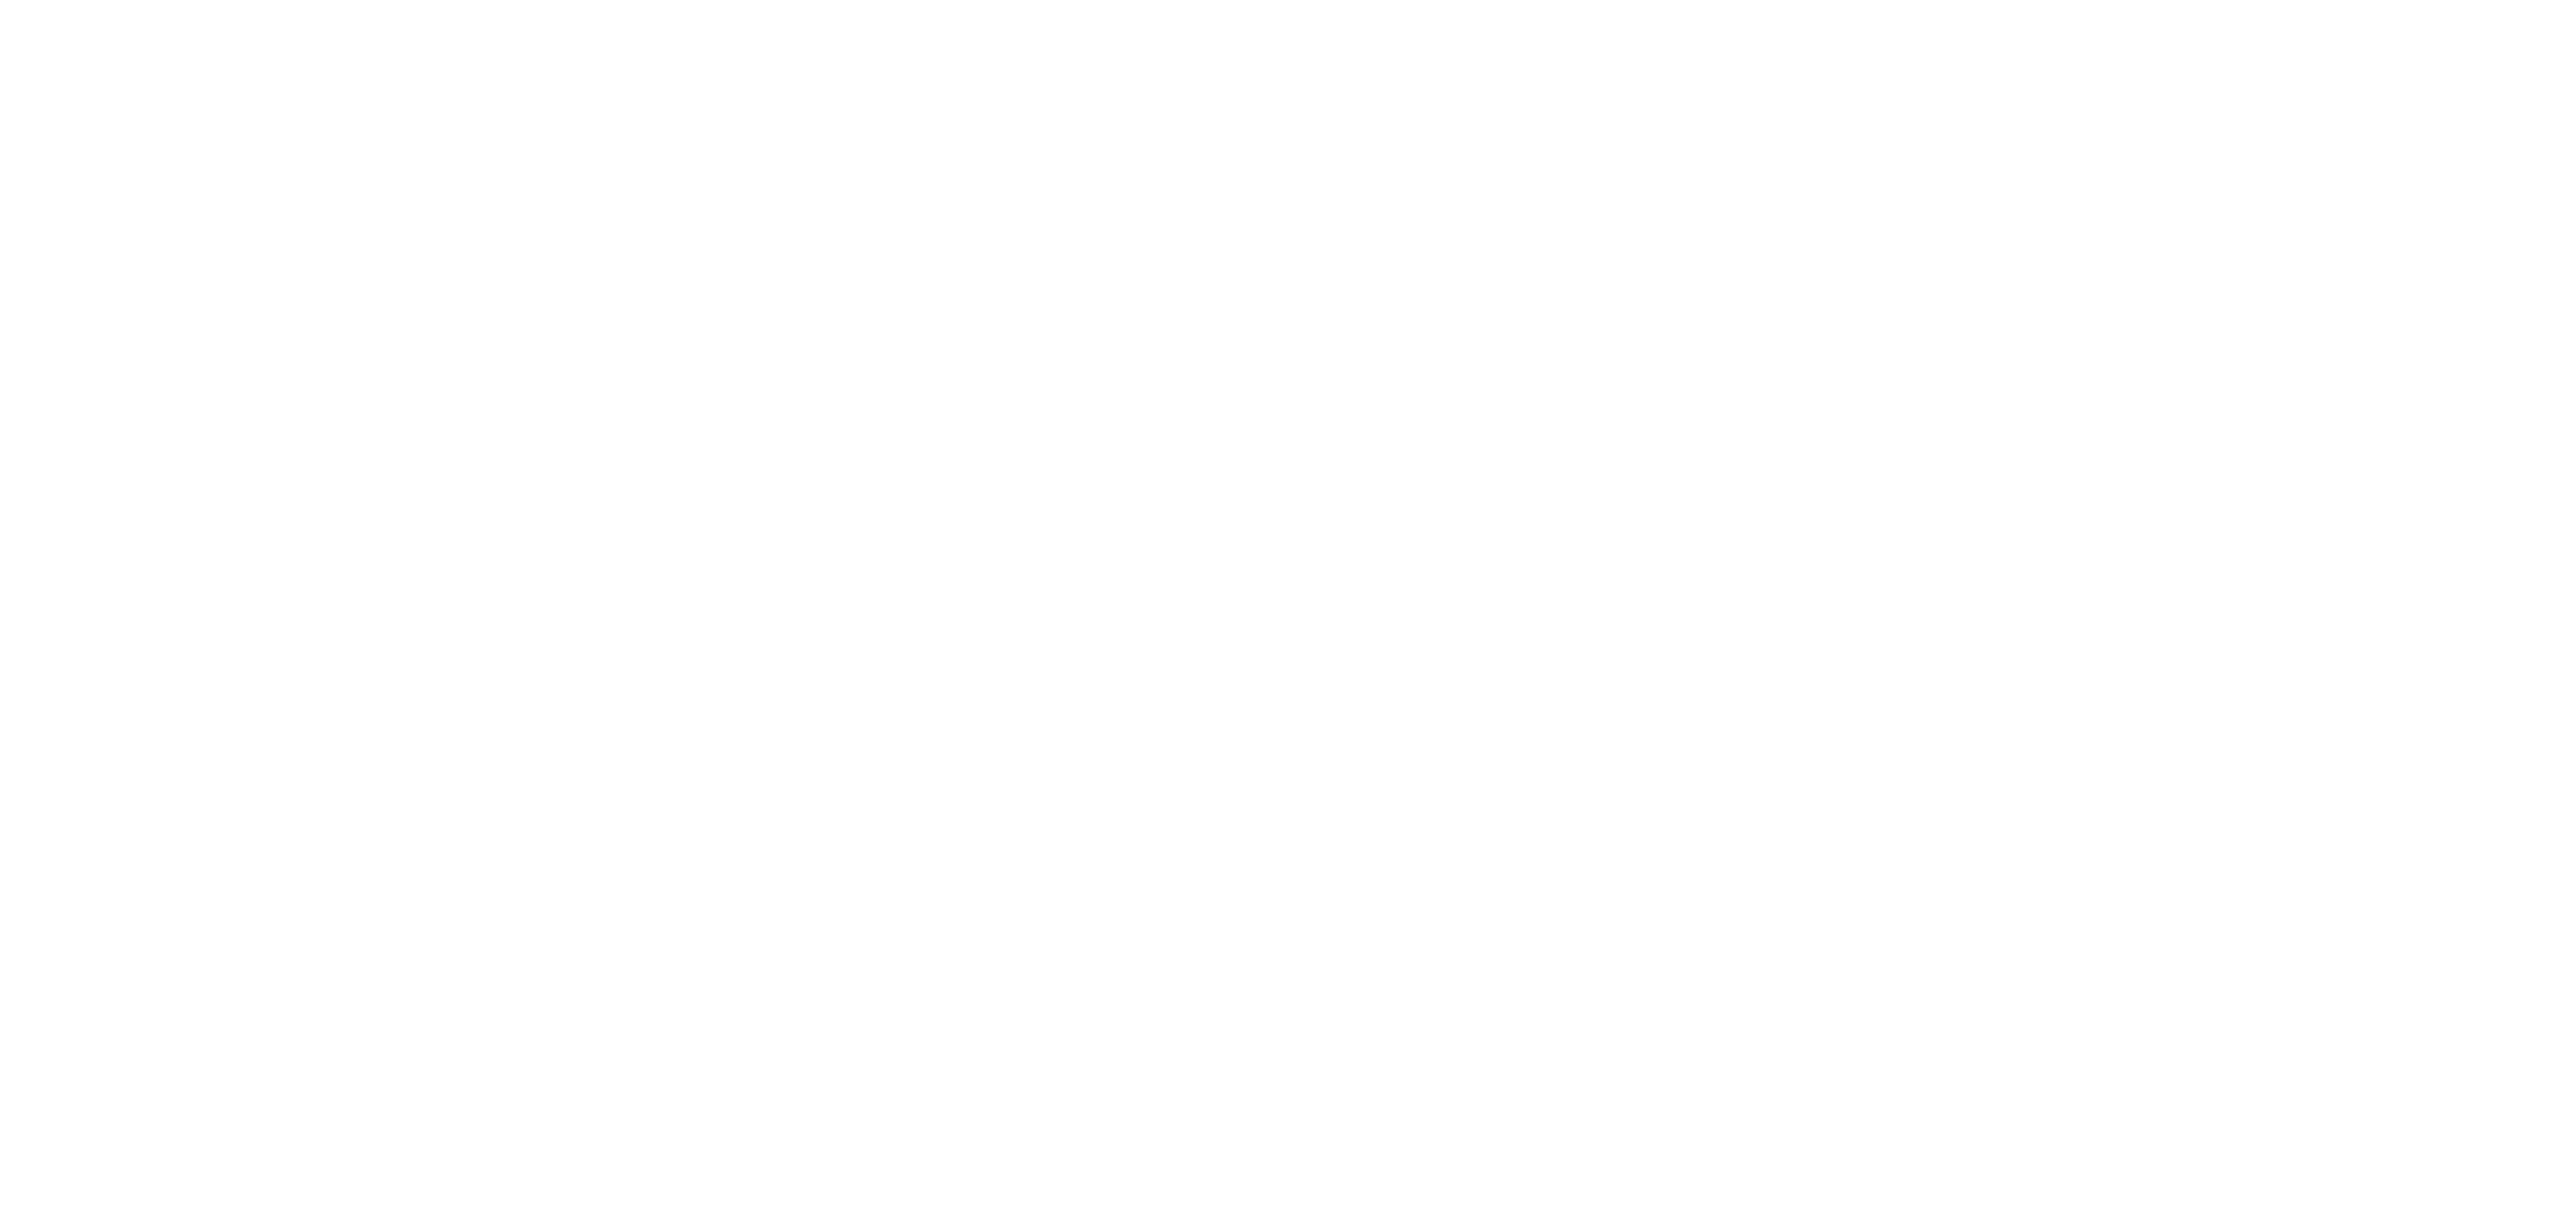 Bureau of Cultural Affairs Kaohsiung City Government logo